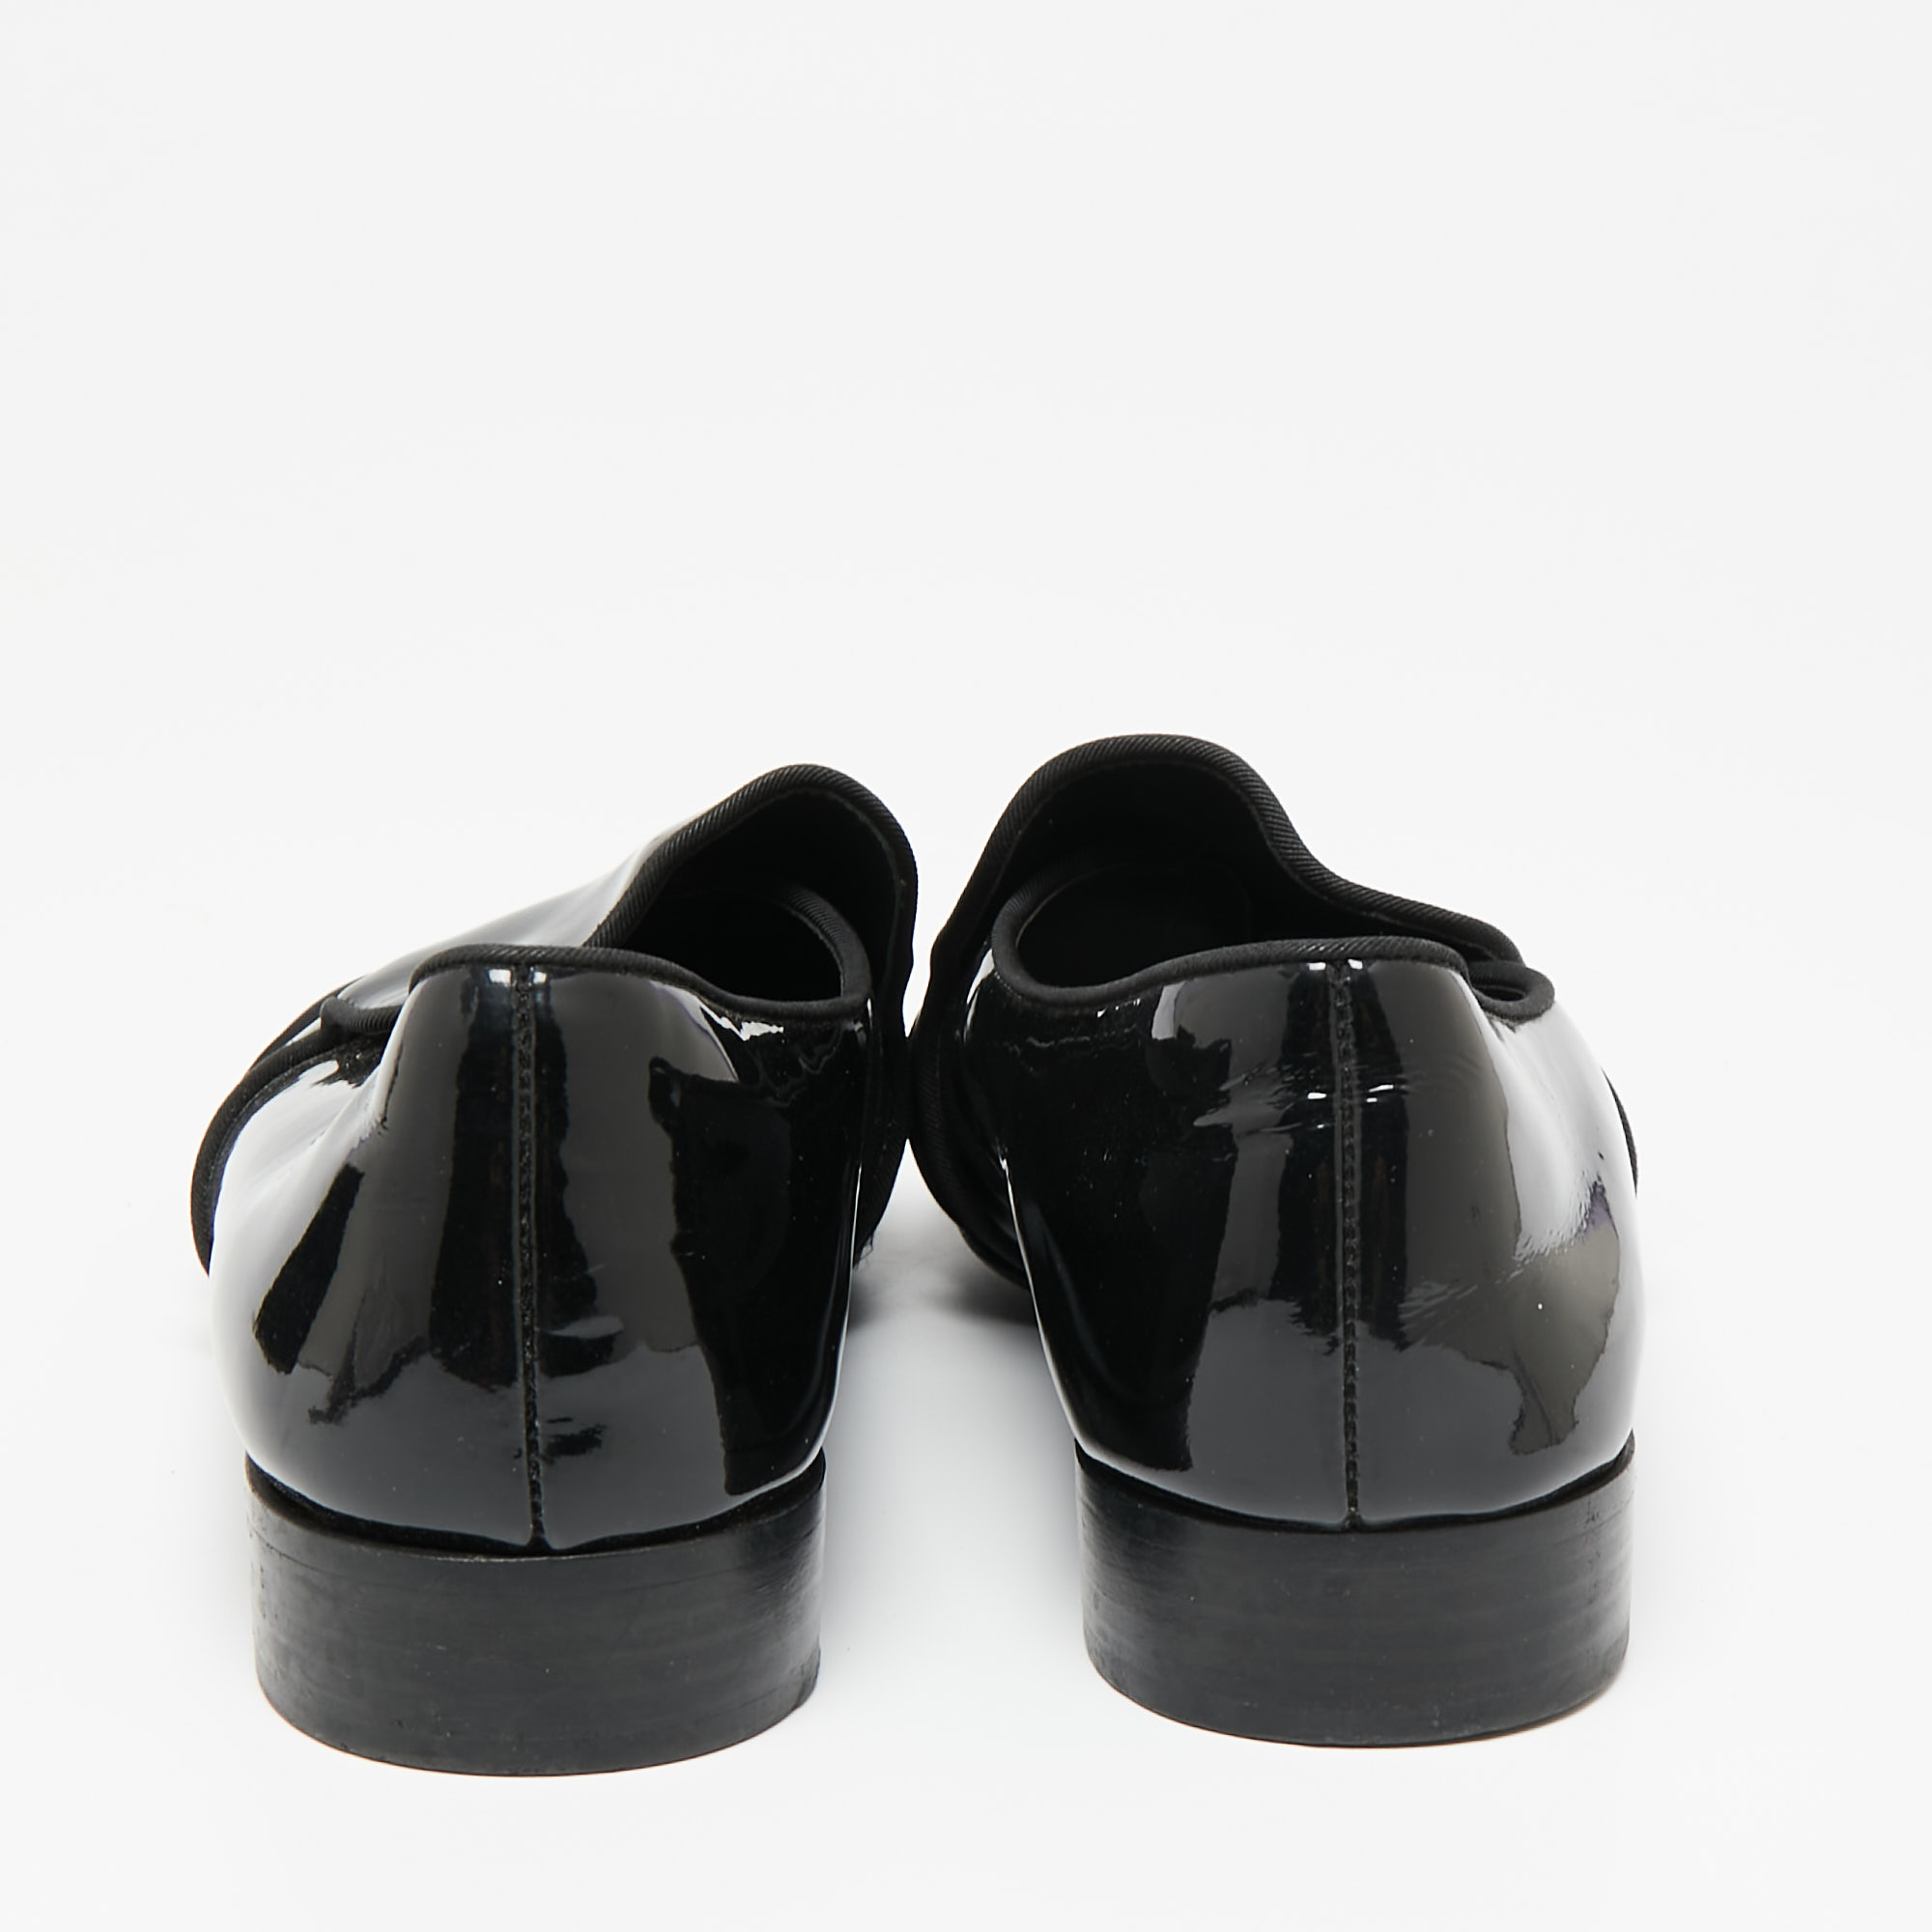 Giuseppe Zanotti Black Patent Leather And Satin Cap Toe Smoking Slippers Size 40